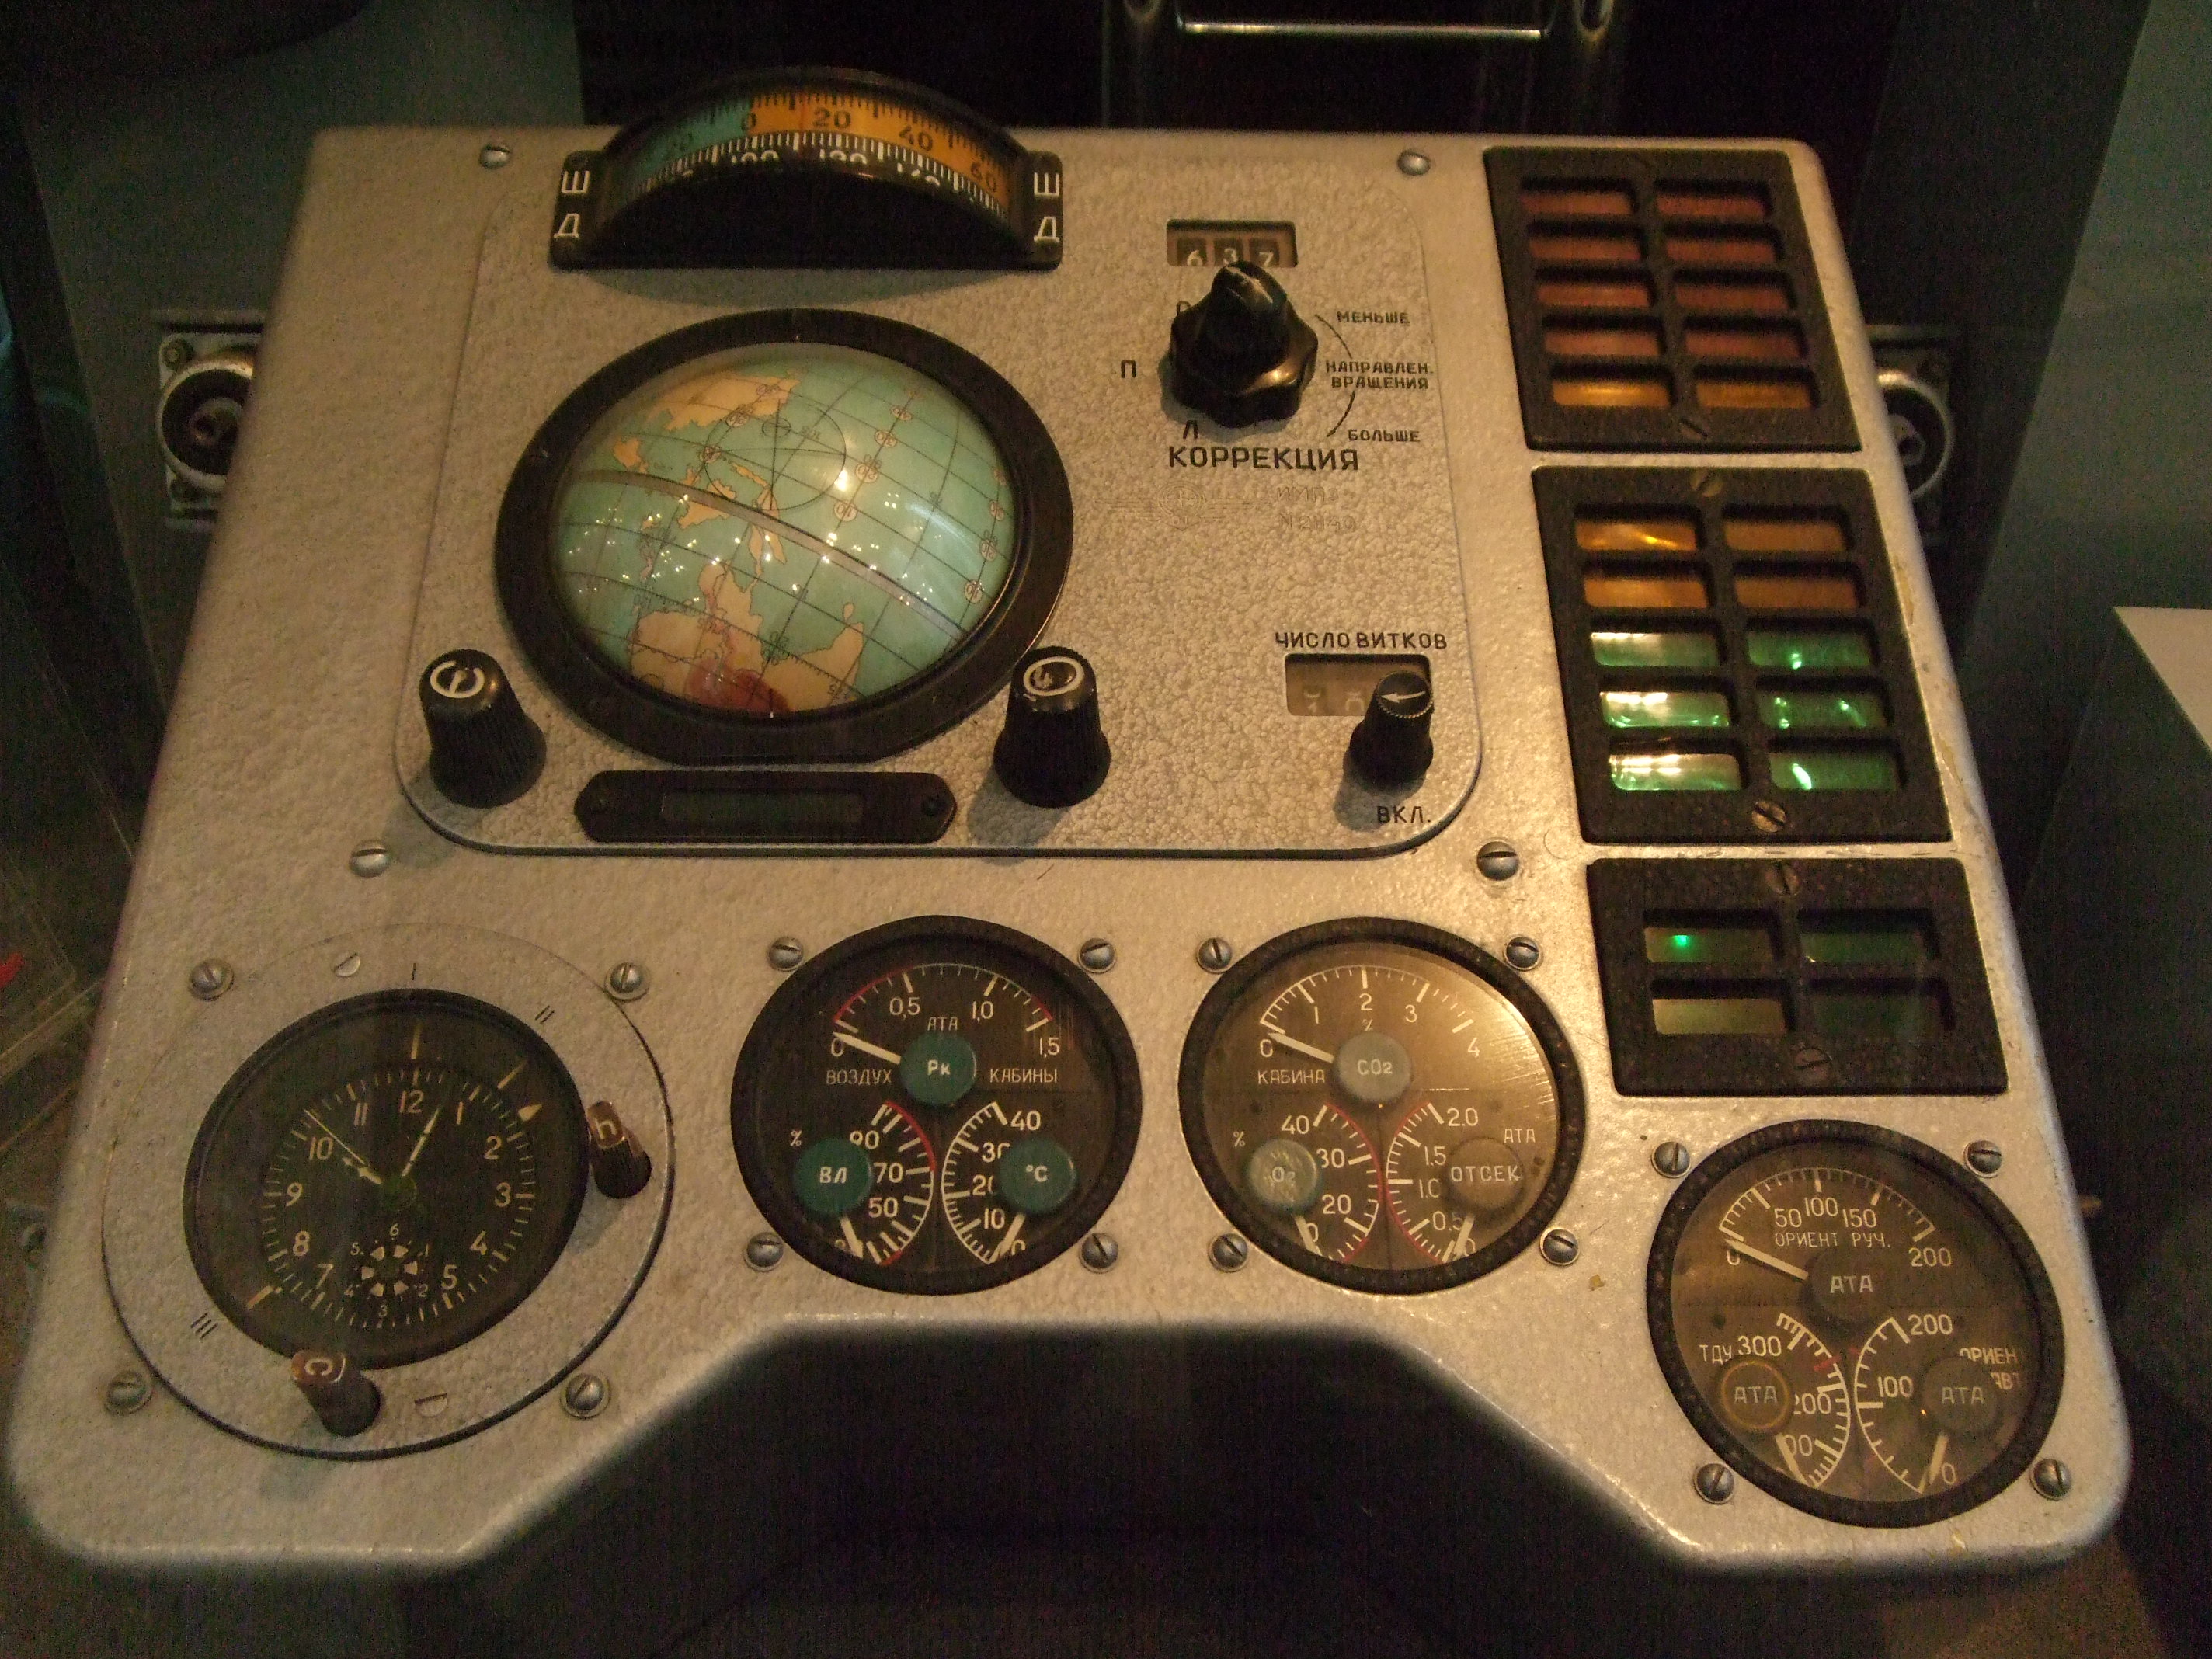 Part of Vostok-1 spacecraft control panel